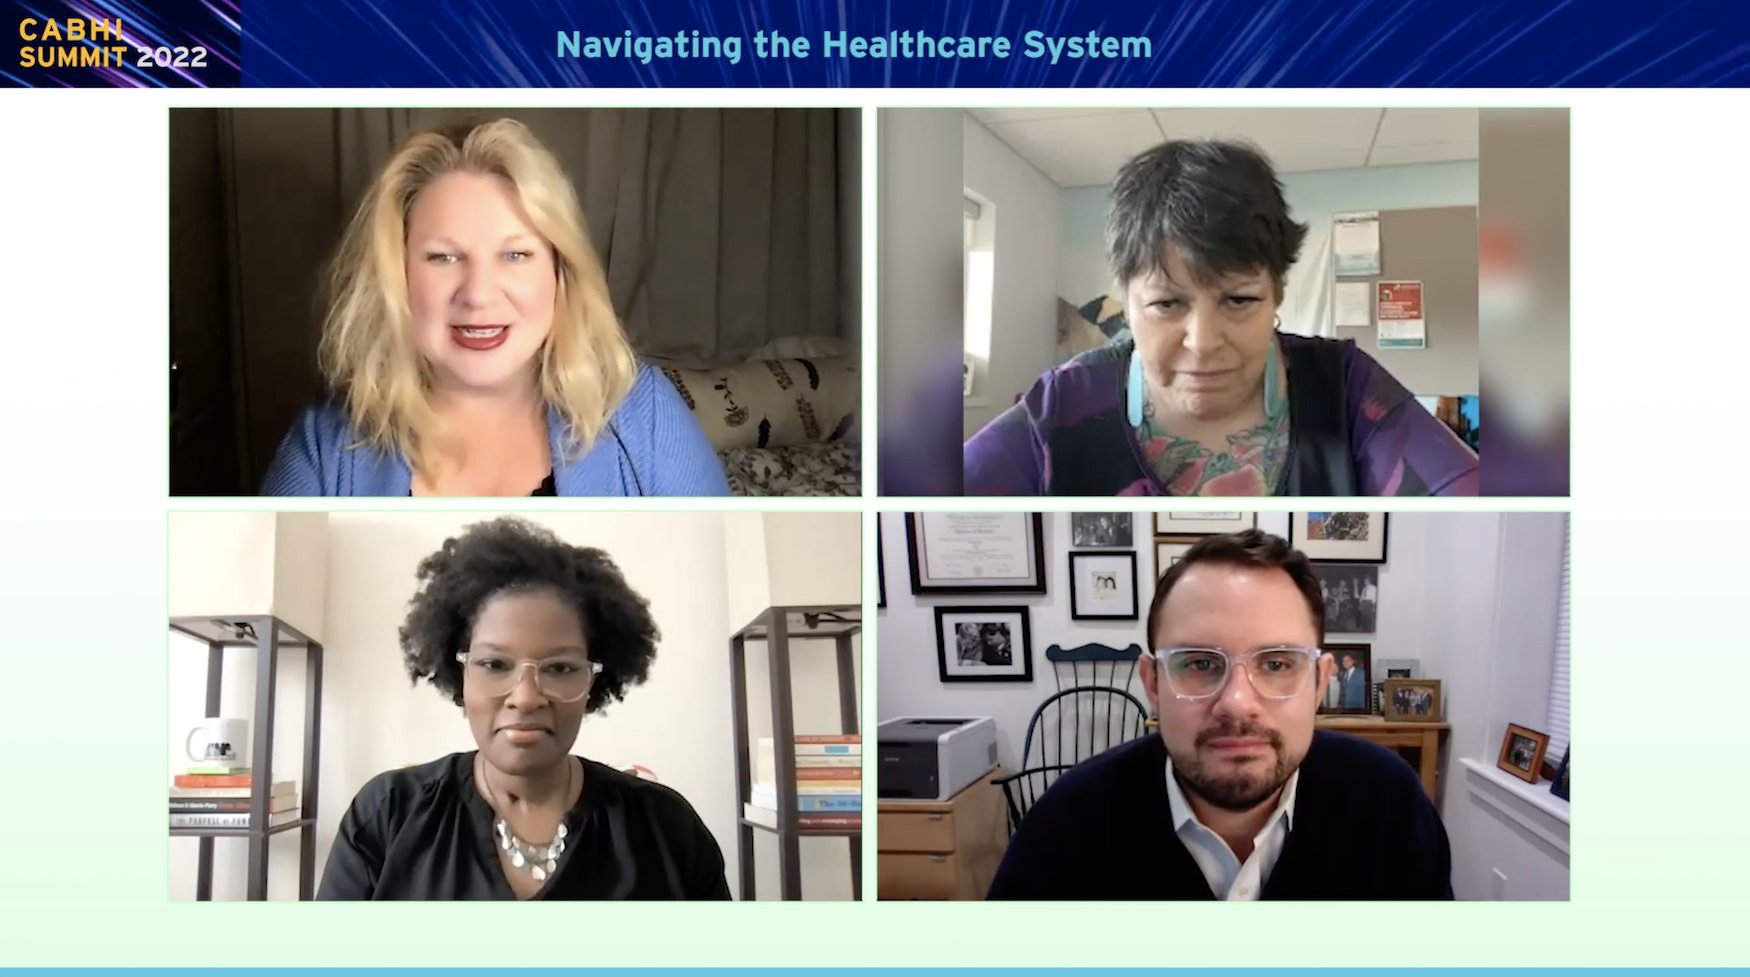 Screenshot from the CABHI Summit: Navigating the Healthcare System panel feat. Laura Tamblyn Watts, Elder Mary Wilson, Aisha Adkins, and Jason Resendez.